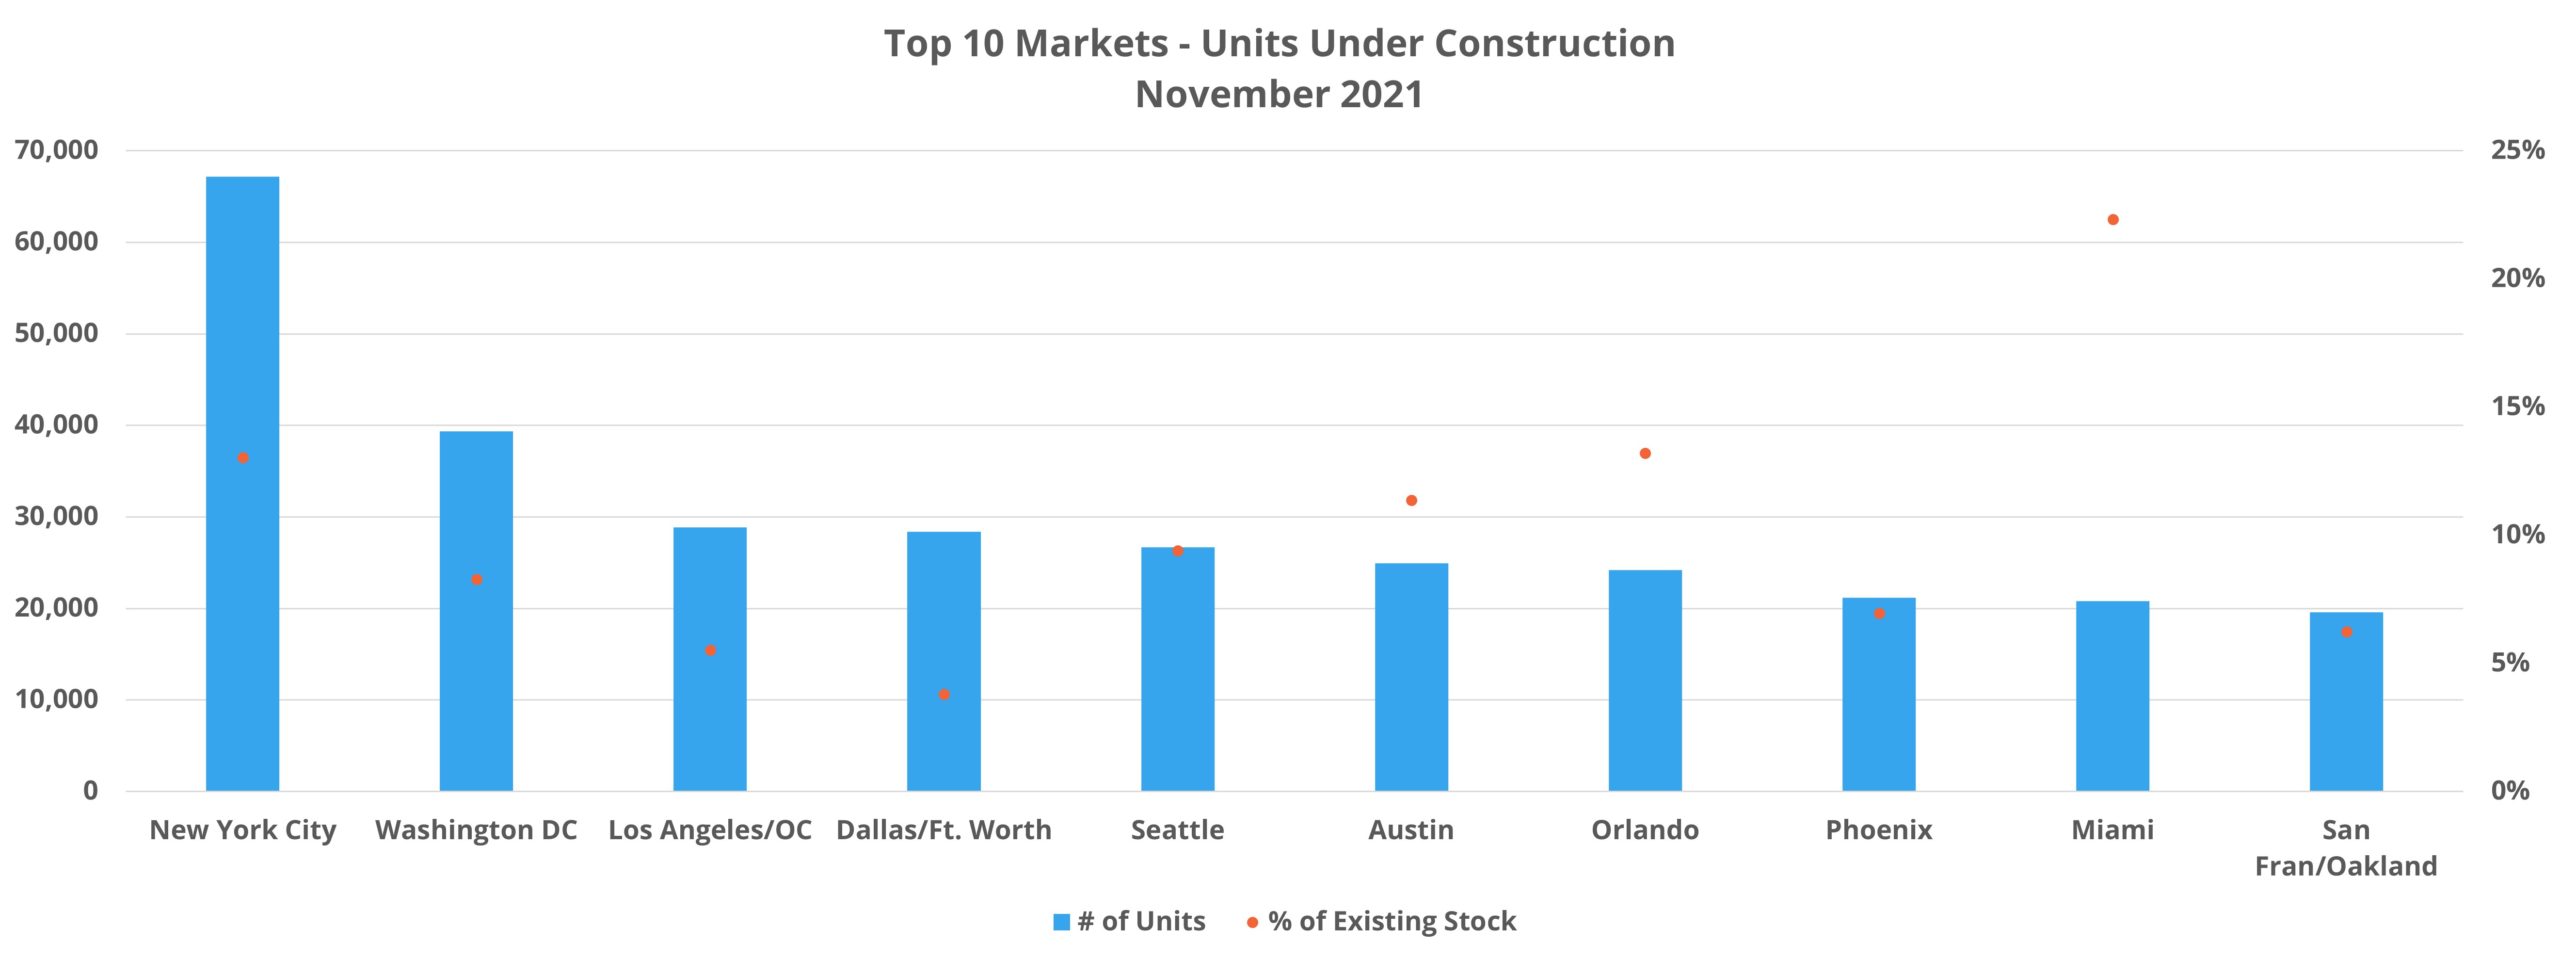 Top 10 Markets - Units Under Construction